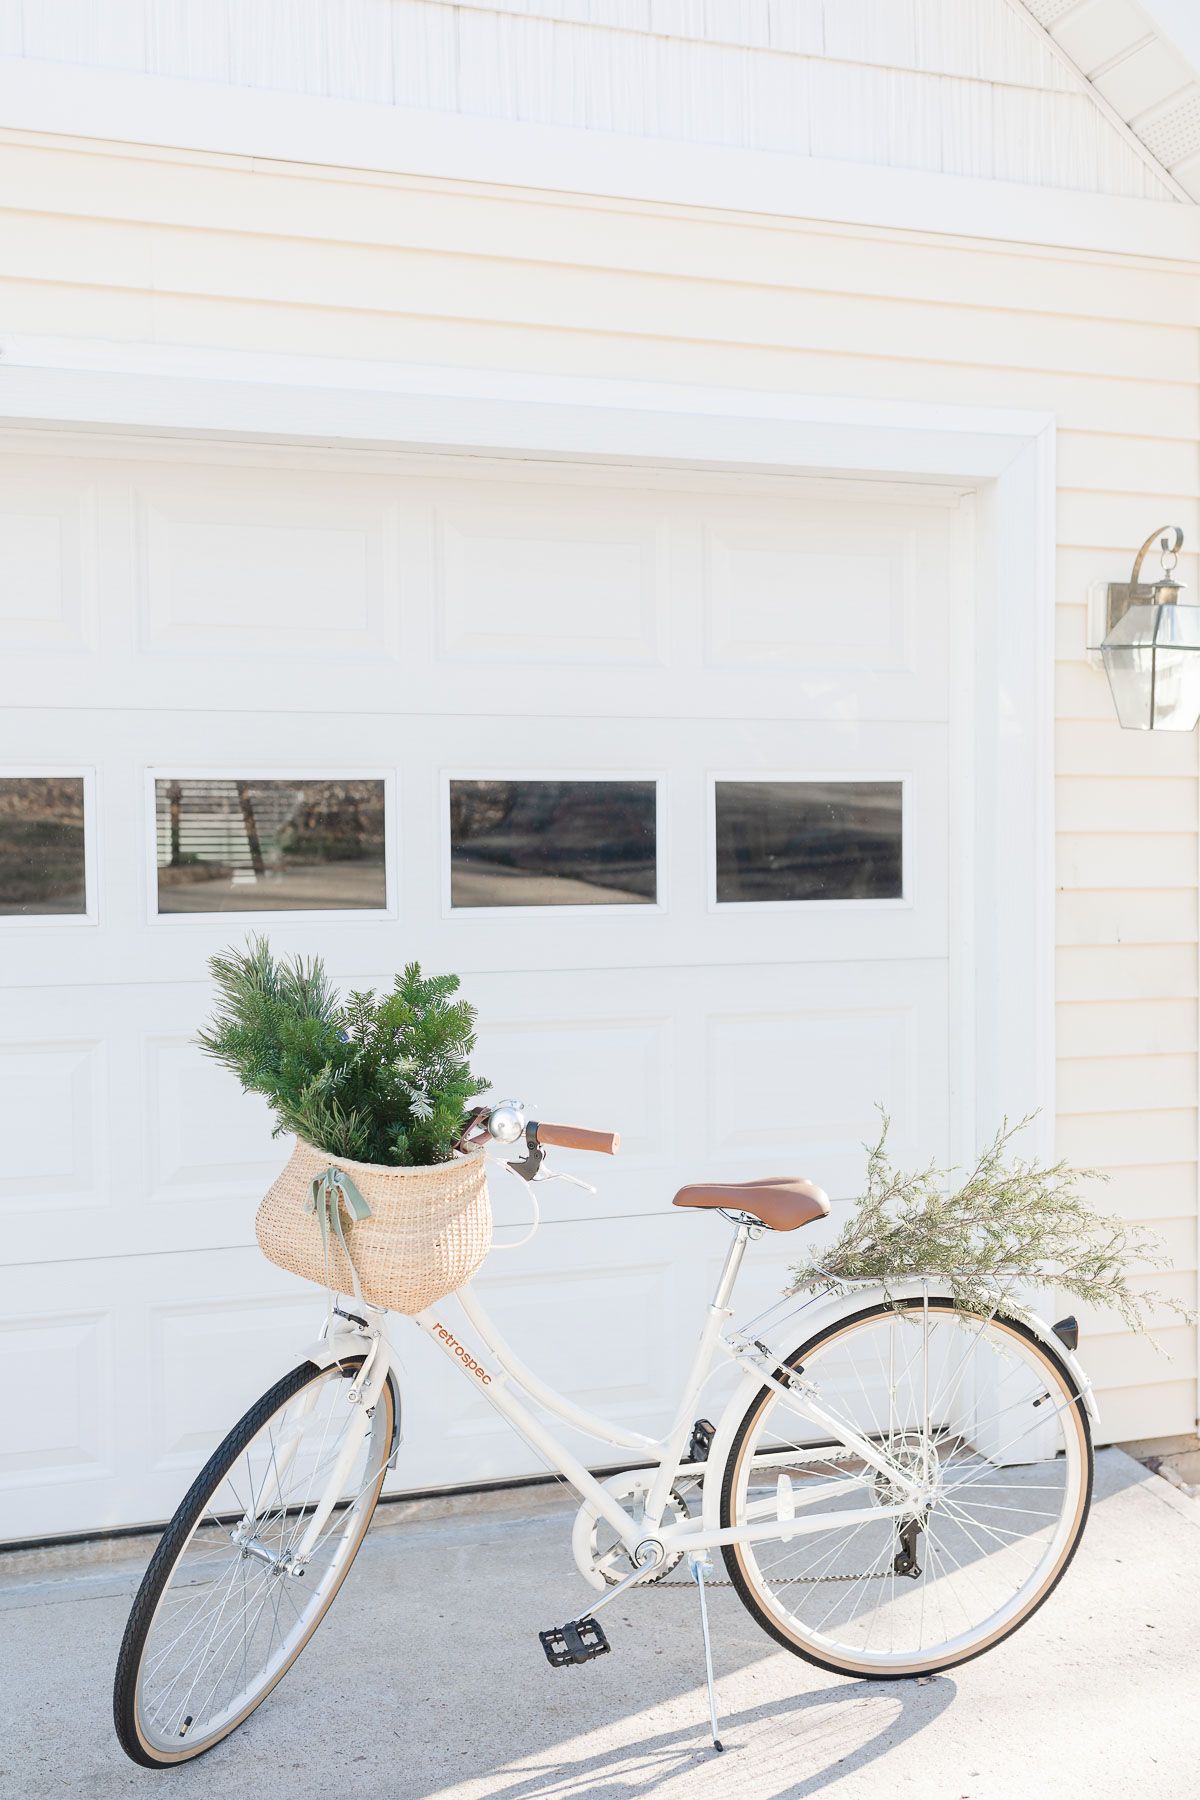 A white beach cruiser bike with Christmas greenery in the basket.